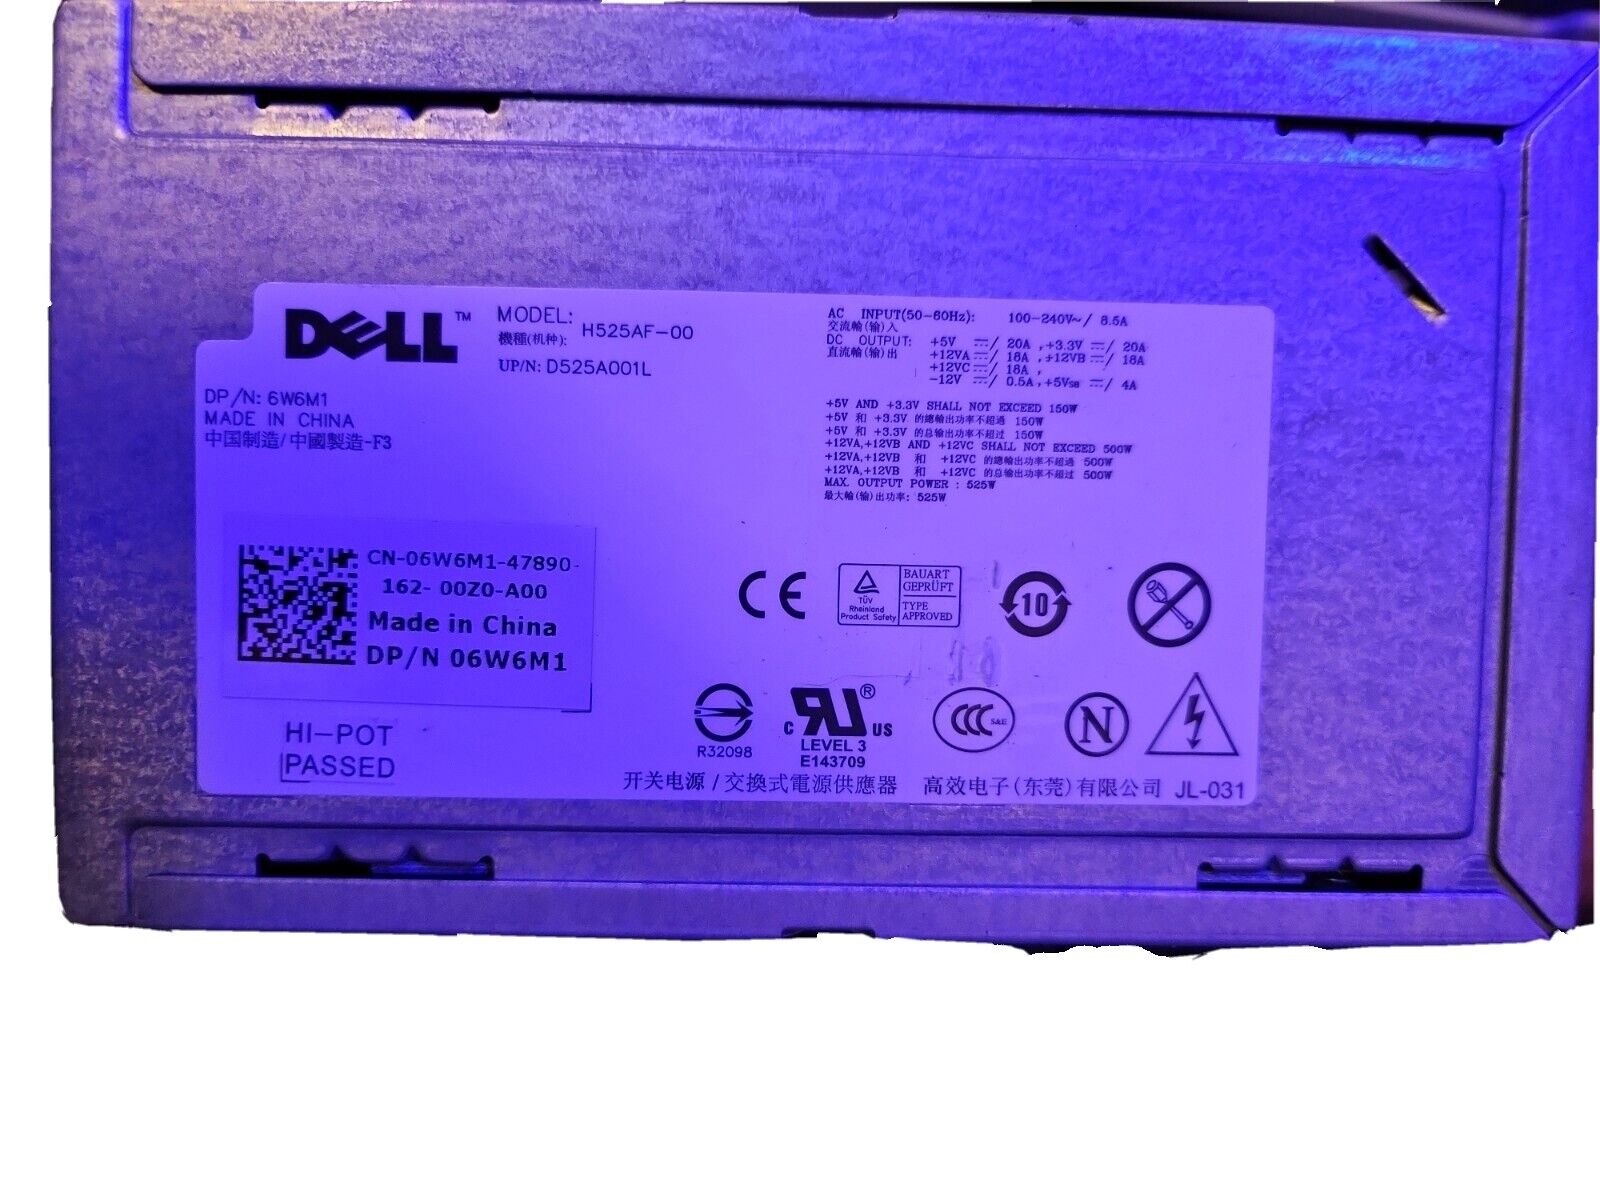 1PC Genuine DELL T3500 Server Power 525W D525AF-00 H525AF-00 X008G M821J 6W6M1